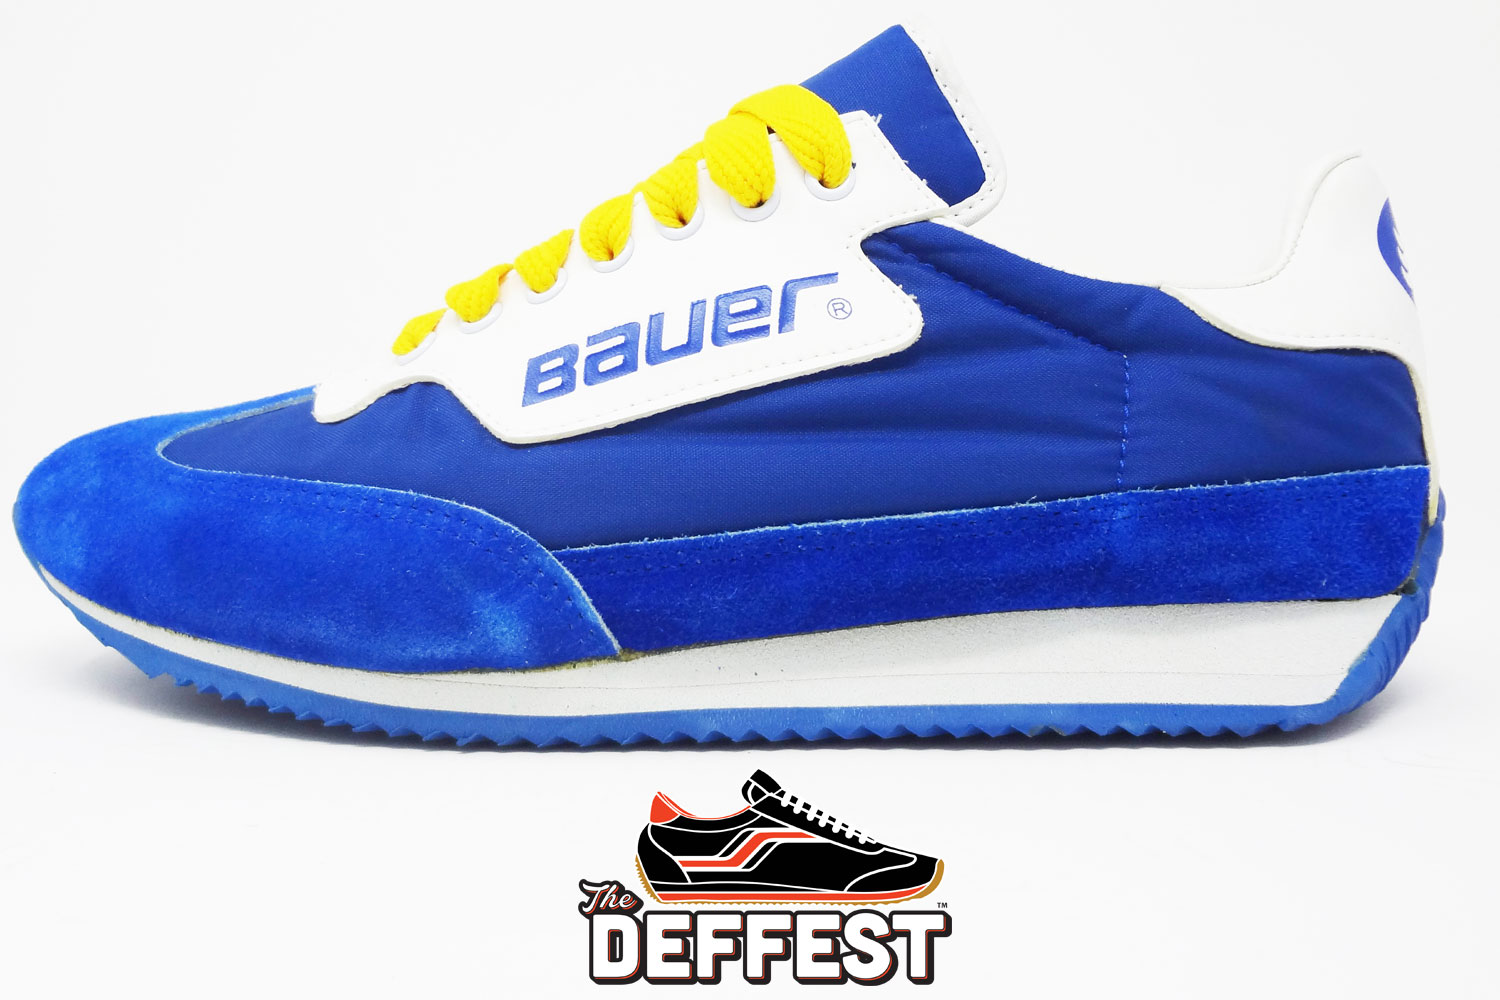 Vintage 70s 80s Bauer Targa II sneakers @ The Deffest